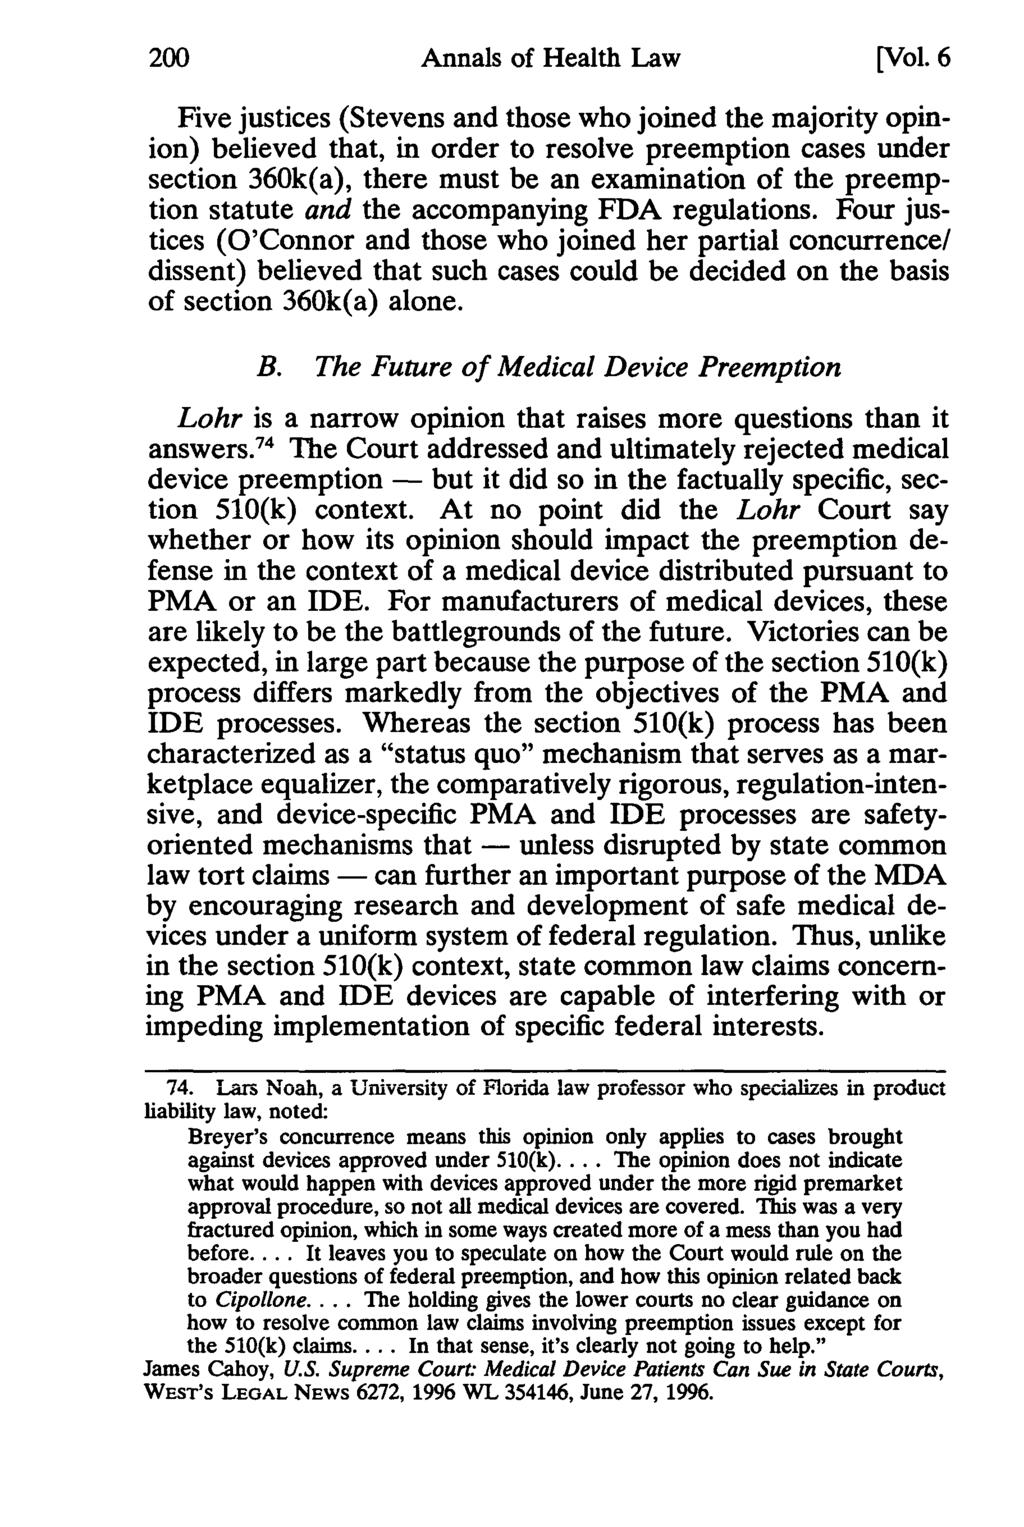 200 Annals of Health Annals Law, Vol. of 6 [1997], Health Iss. 1, Law Art. 10 [Vol.